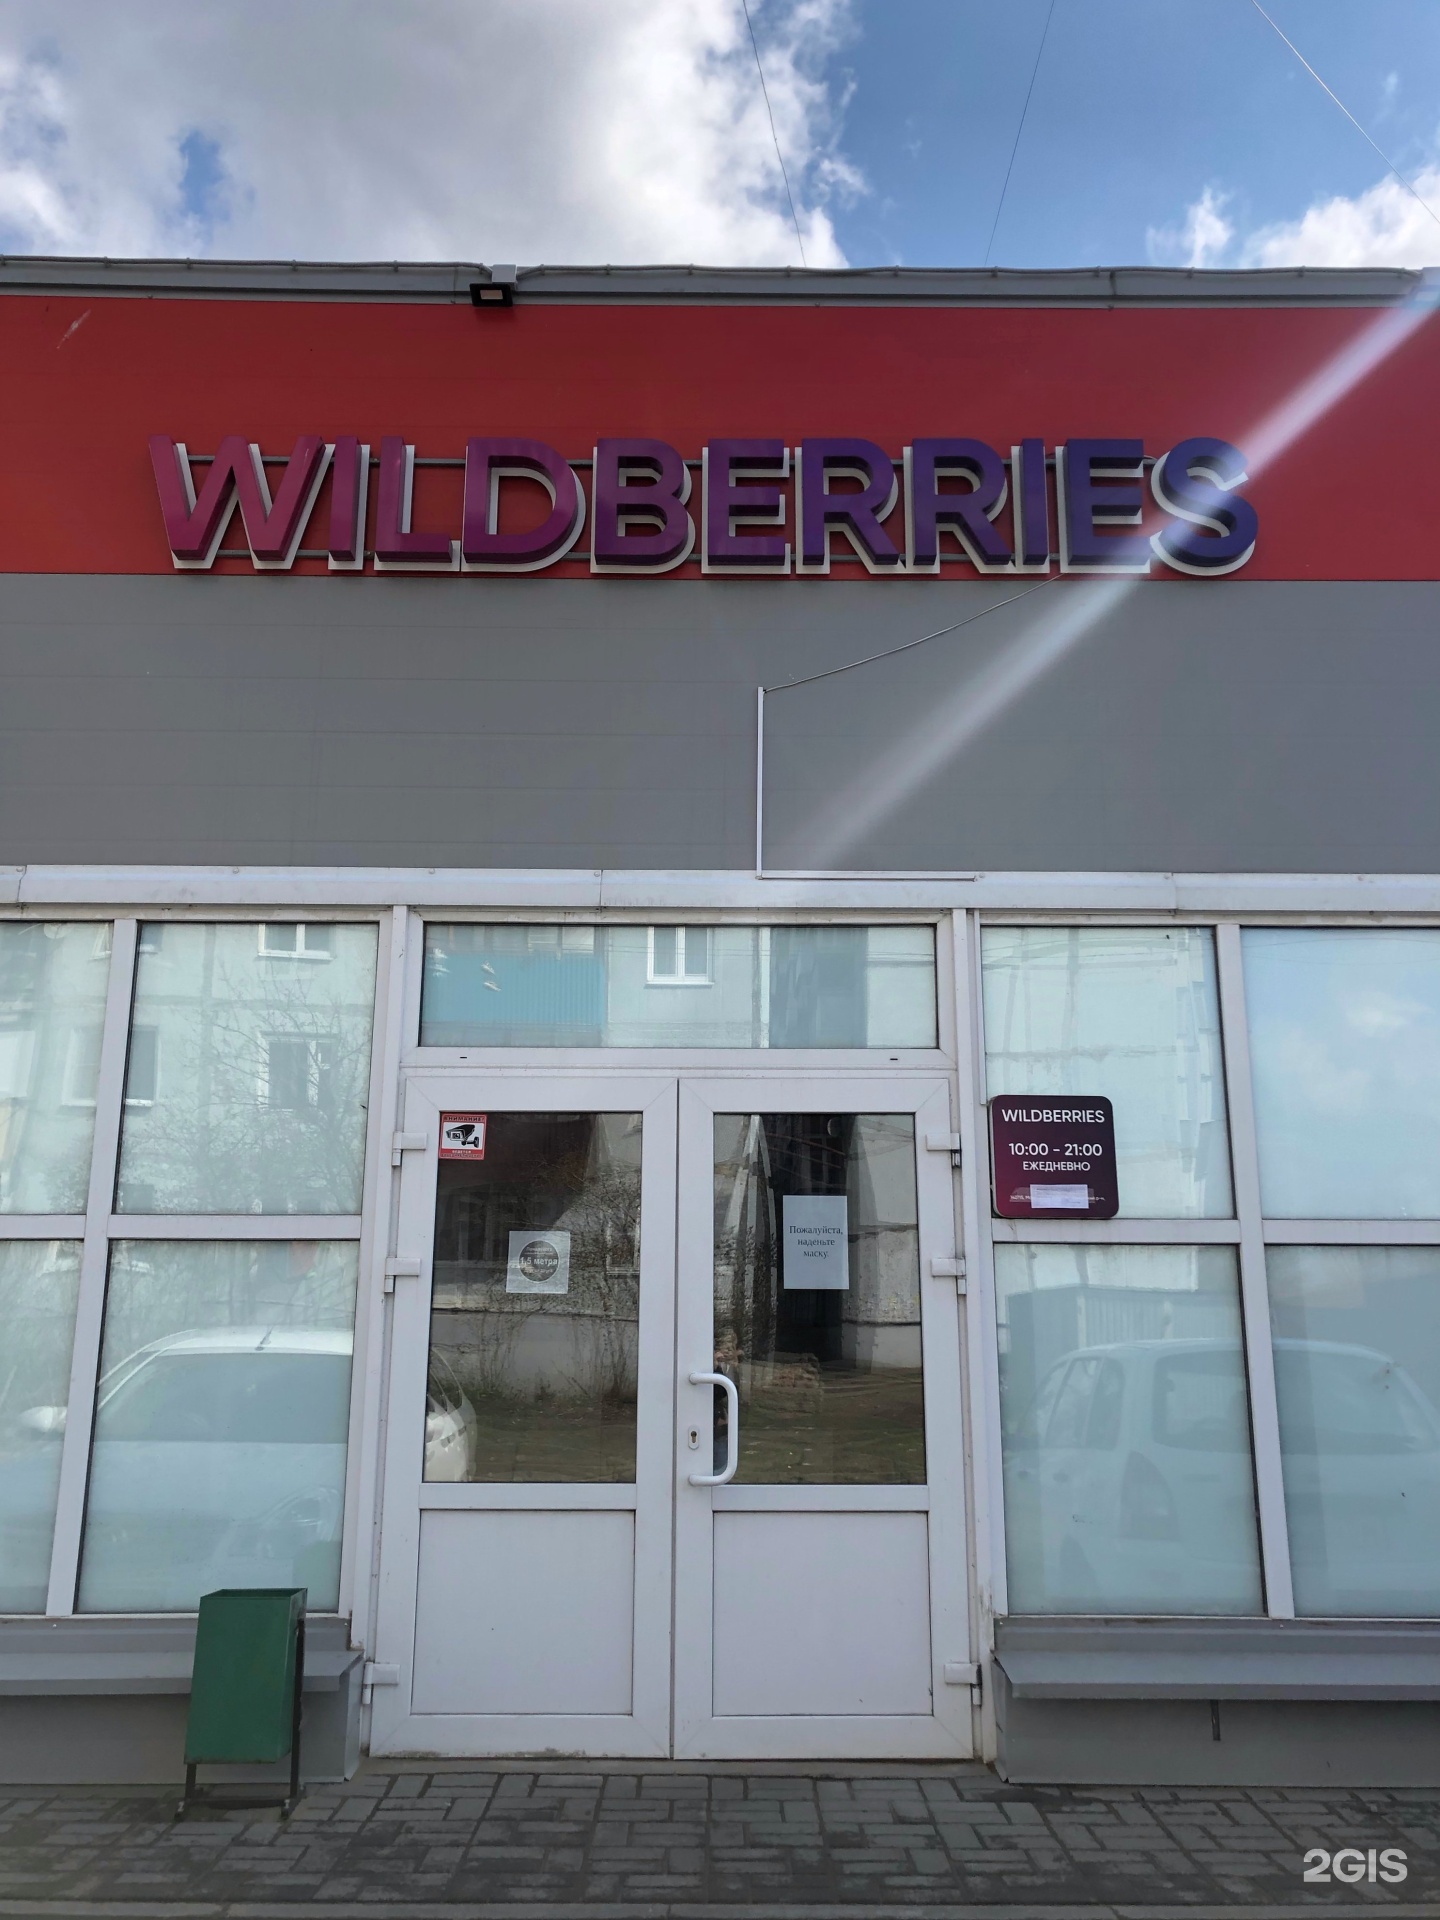 Wildberries Интернет Магазин Тамбов